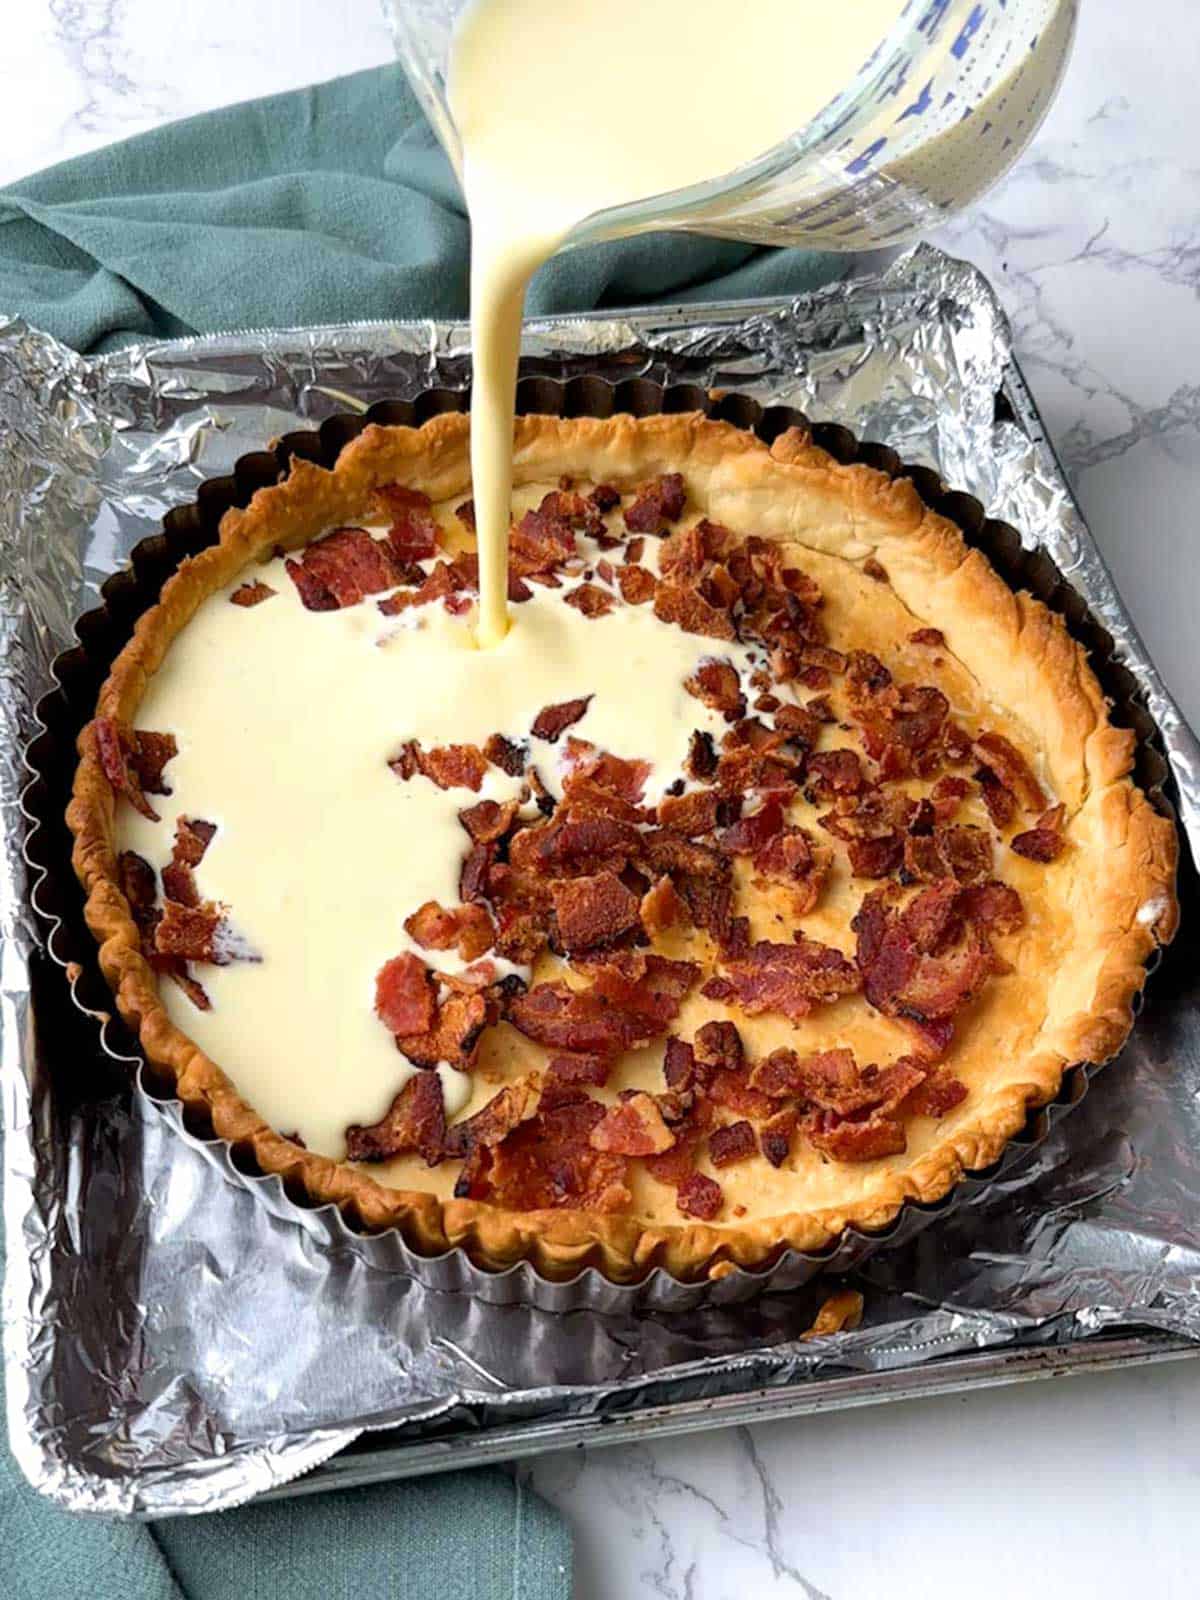 Adding custard to bacon in a pie shell for Quiche Lorraine.